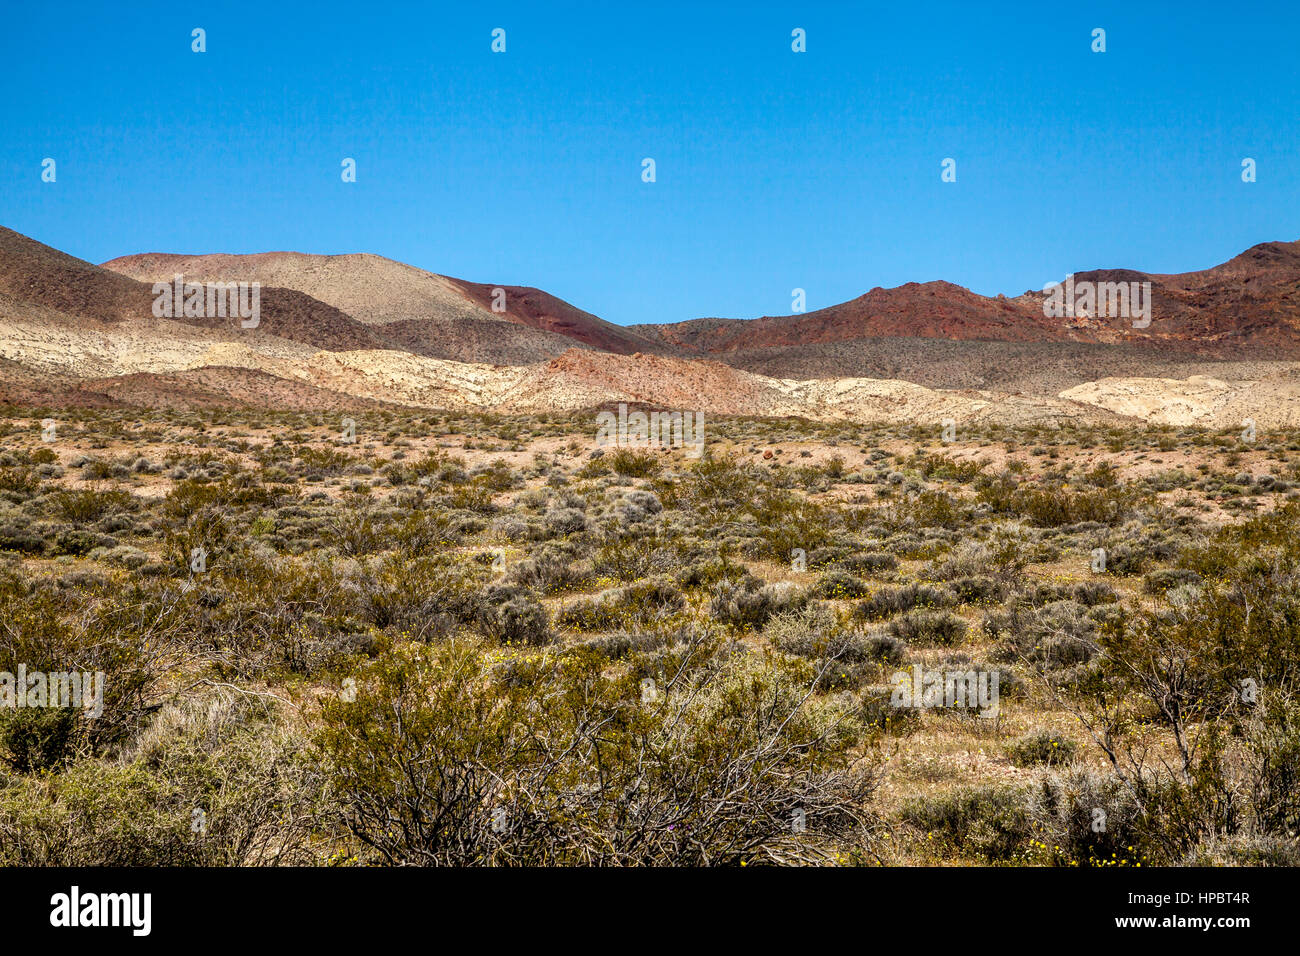 Plain champ, Death Valley National Park, California, USA Banque D'Images